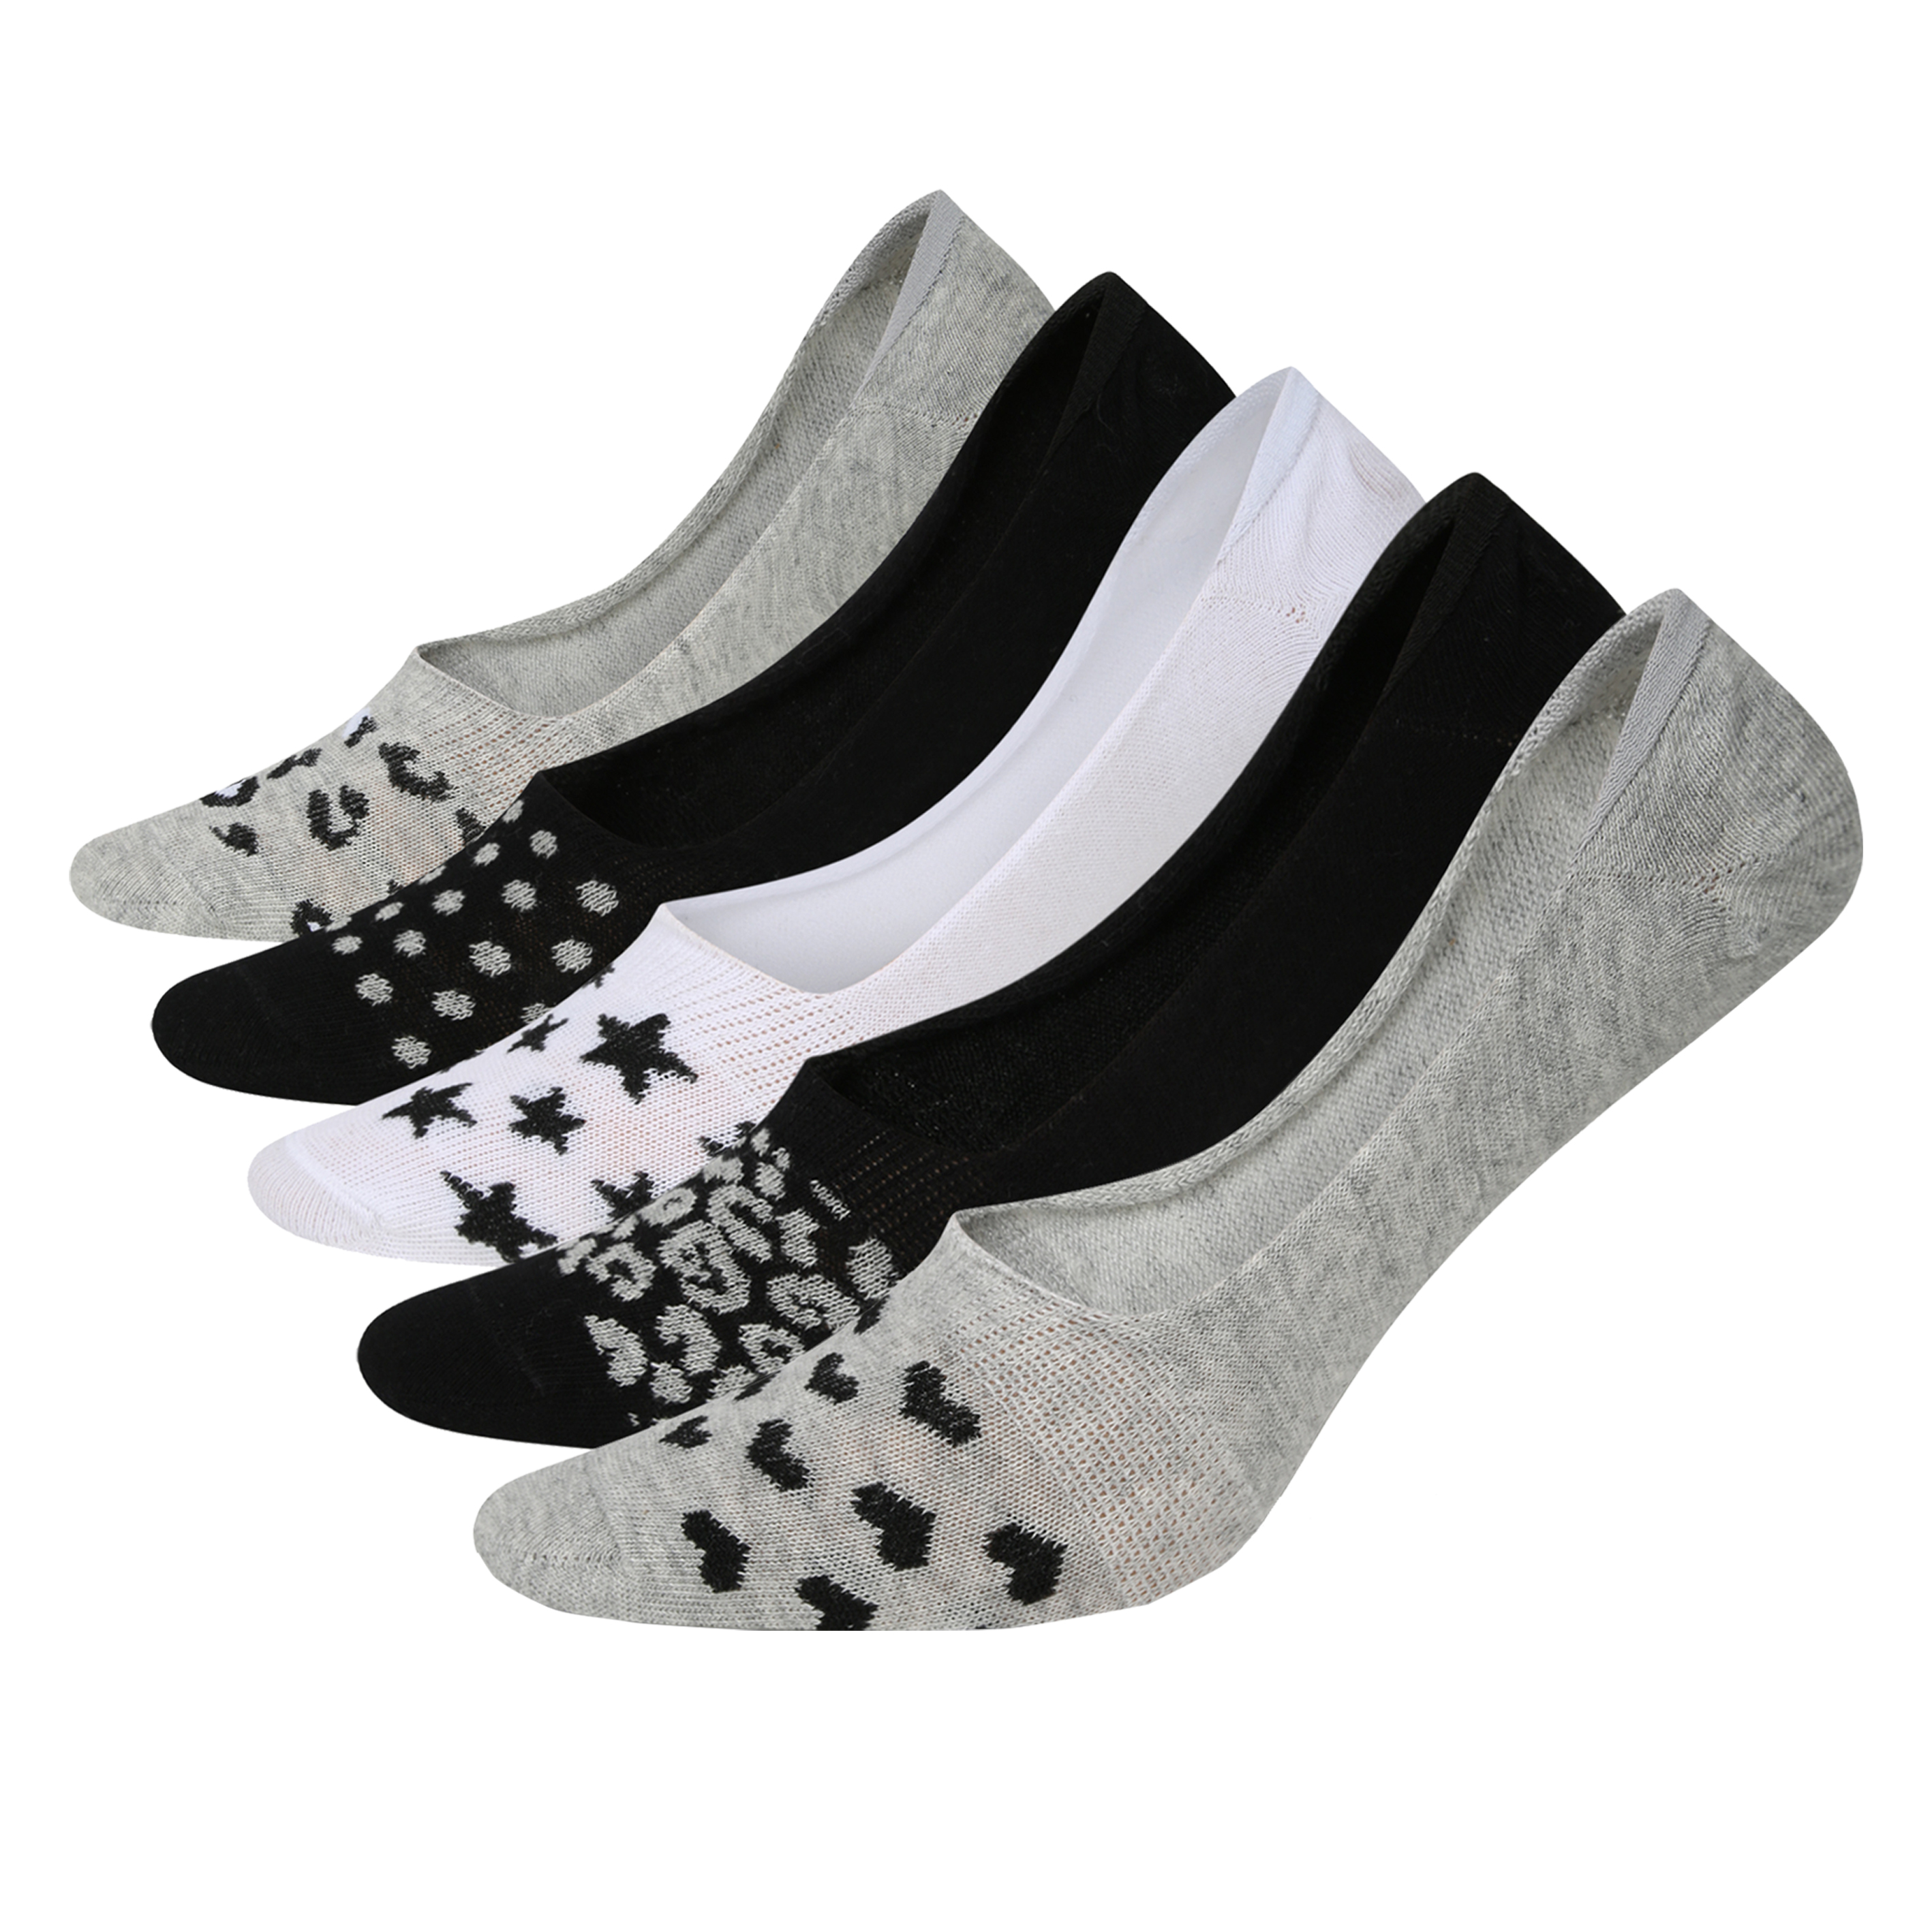 Details about   Ladies Secret Socks / Trainer Socks Brand New Size 4-8 White 5-Pack 